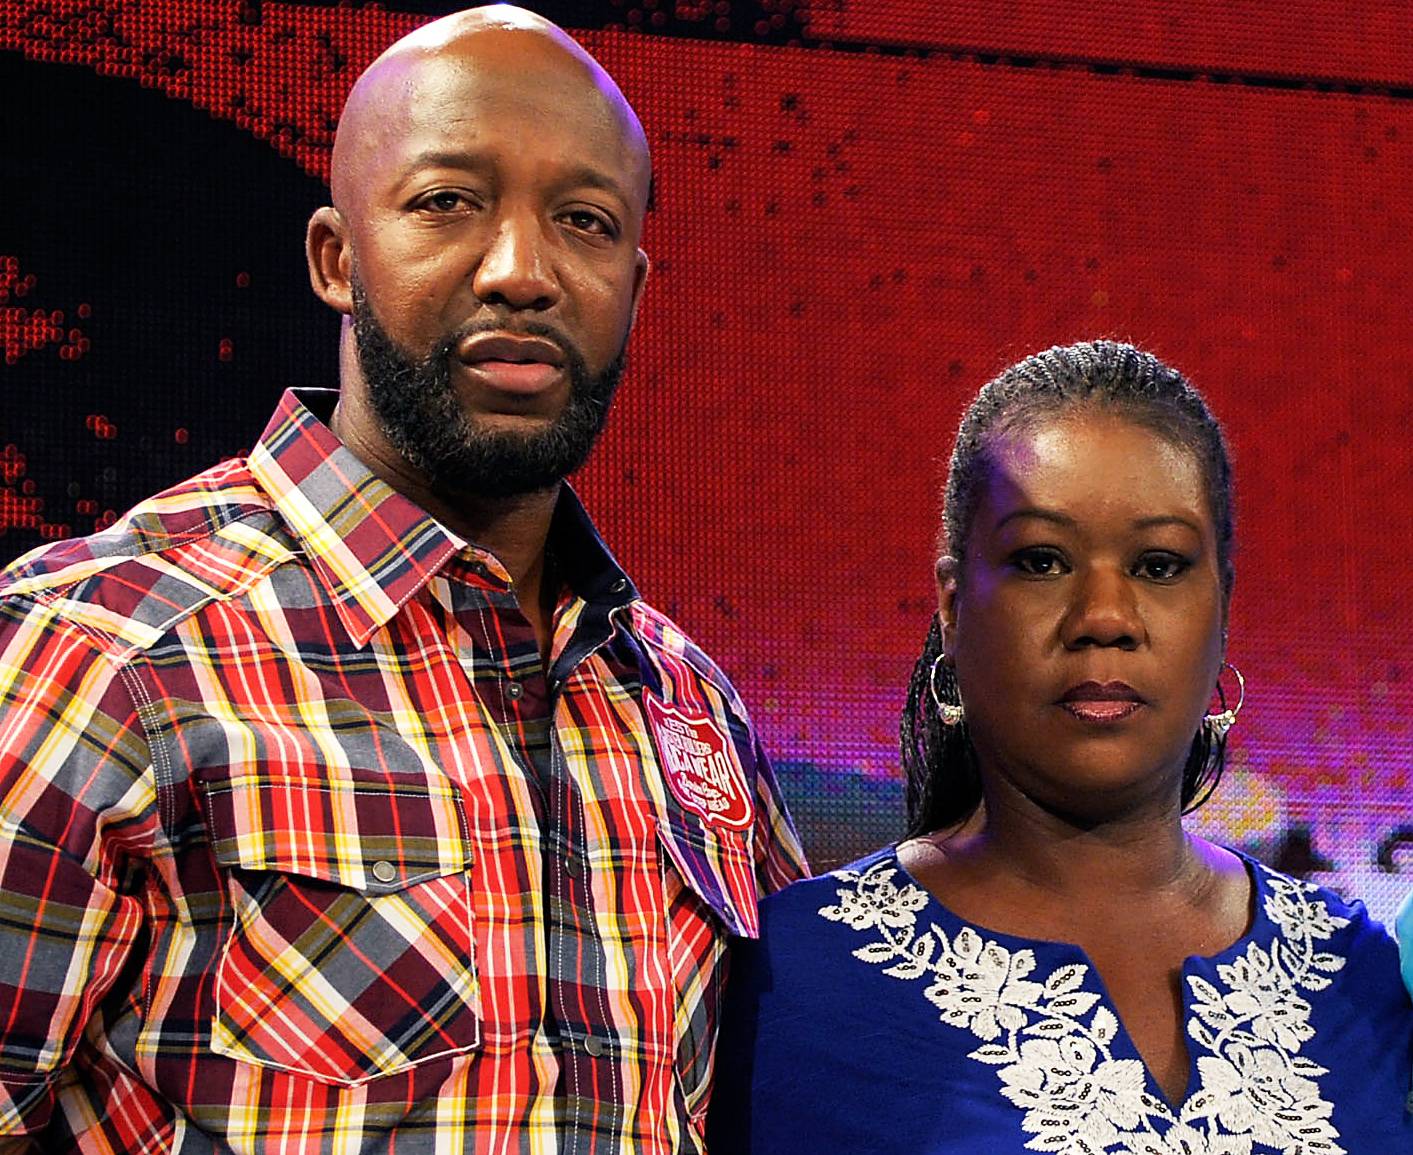 Trayvon's Parents Support Slain Fla. Teen's Family